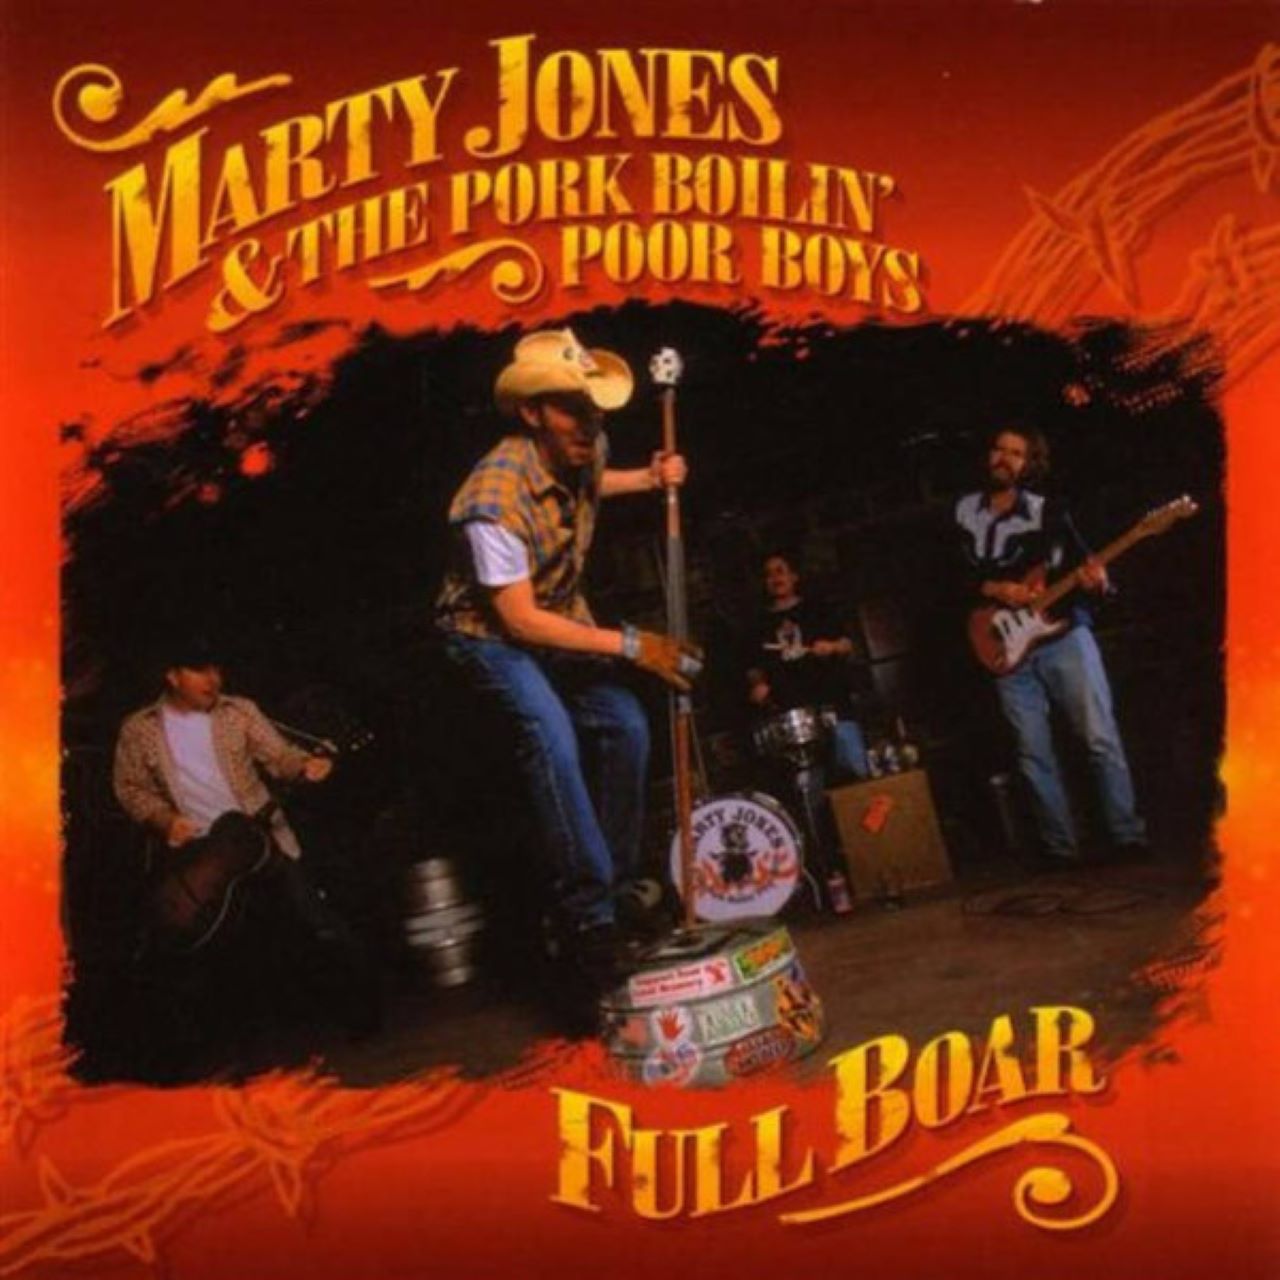 Marty Jones & The Pork Boilin' Poor Boys - Full Boar cover album